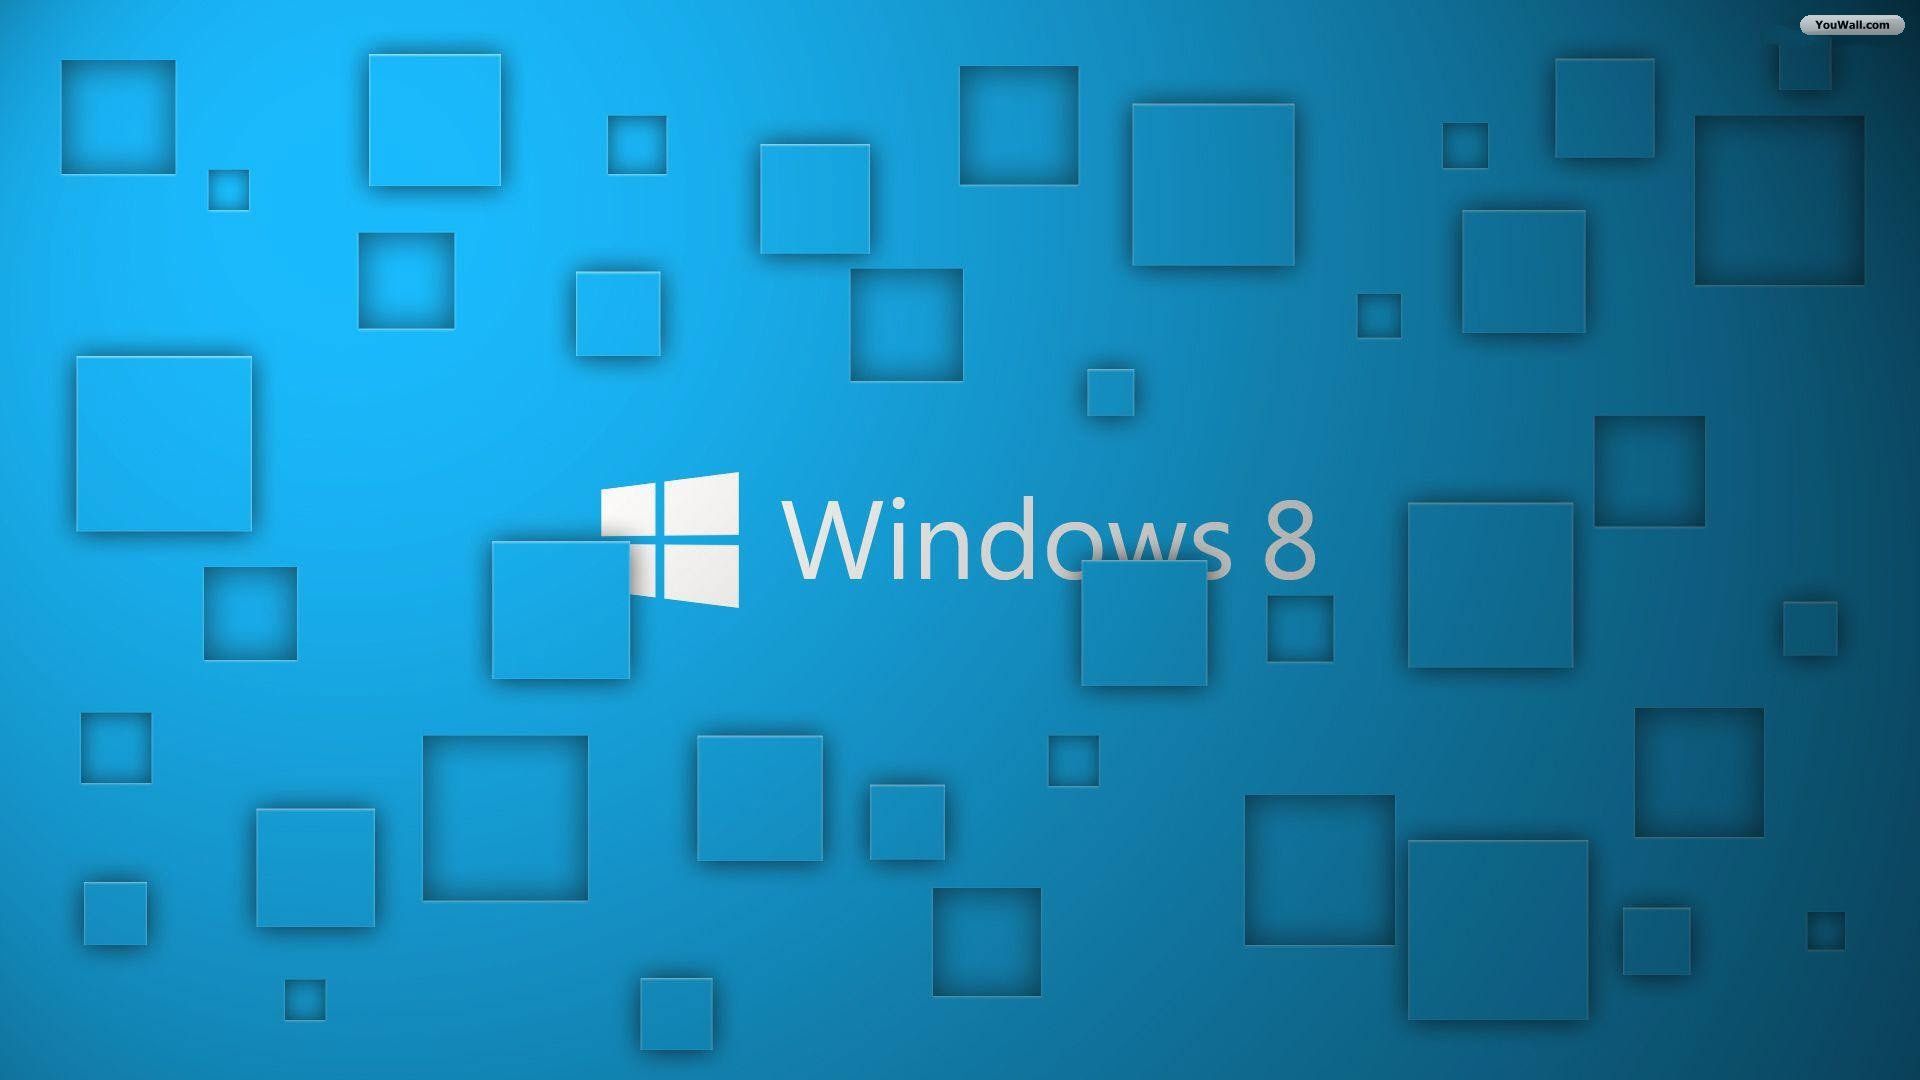 YouWall - Windows 8 Wallpaper - wallpaper,wallpapers,free